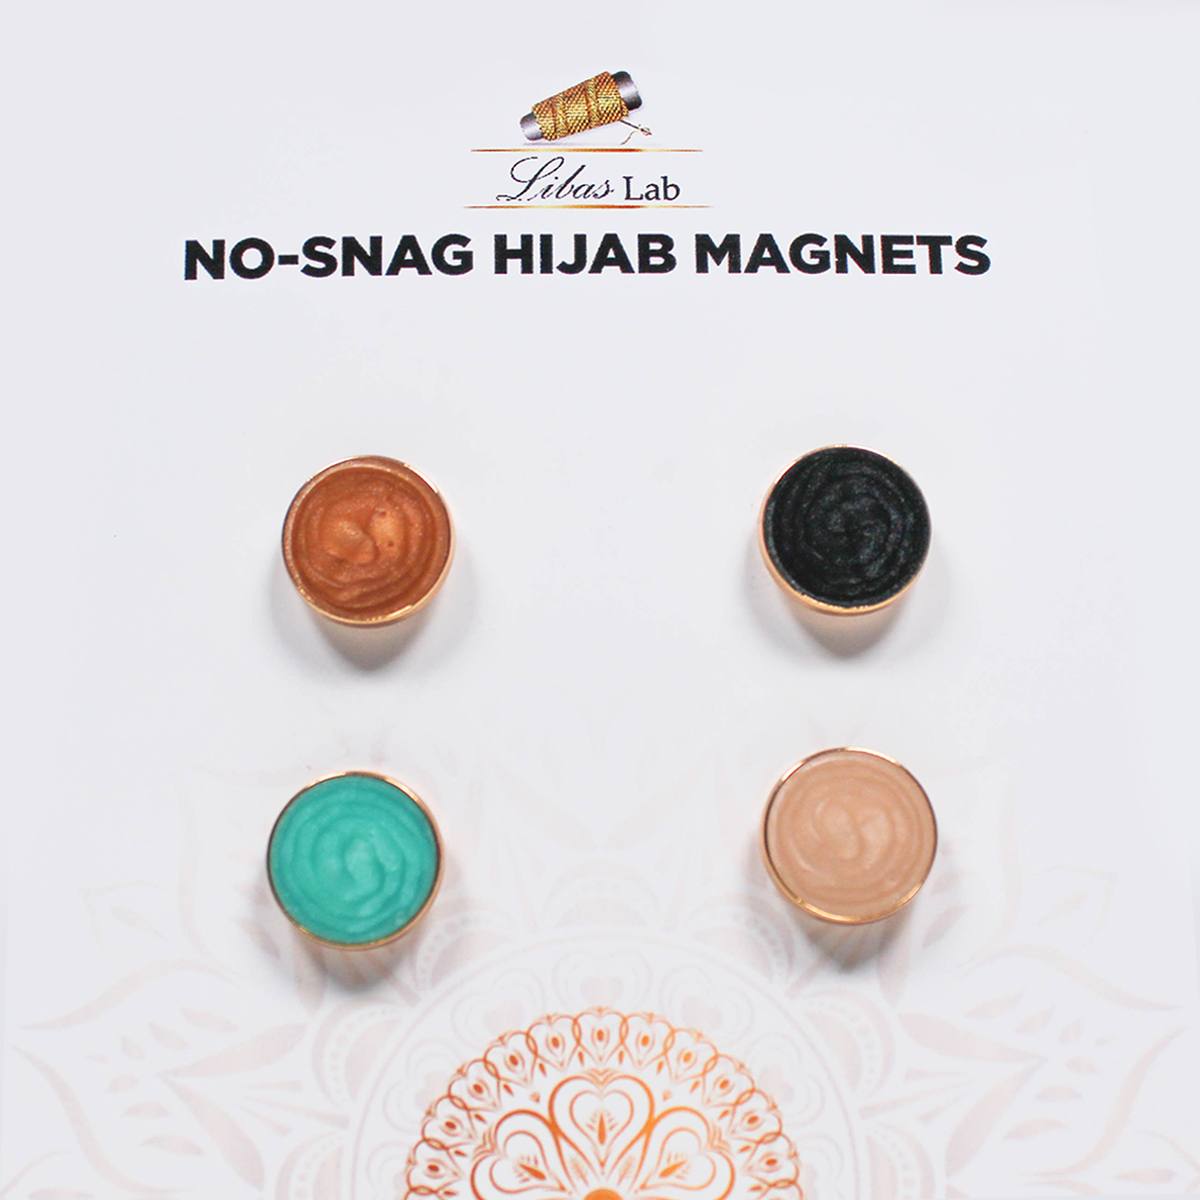 Premium hijab  magnets-Mix colours Round Stone Shaped-1